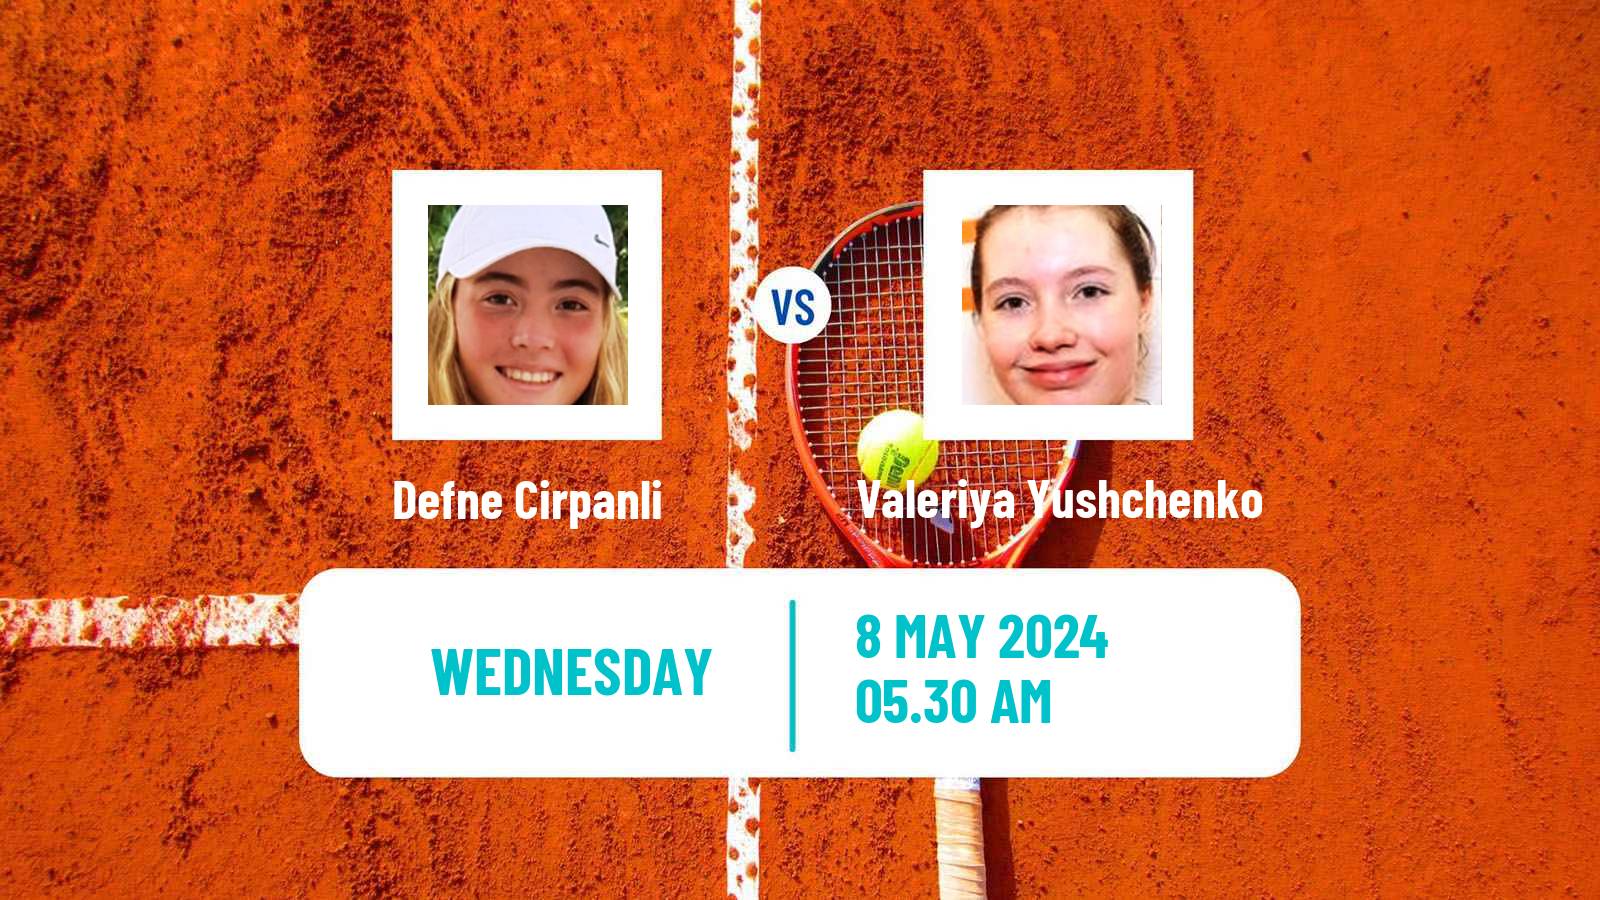 Tennis ITF W15 Antalya 13 Women Defne Cirpanli - Valeriya Yushchenko